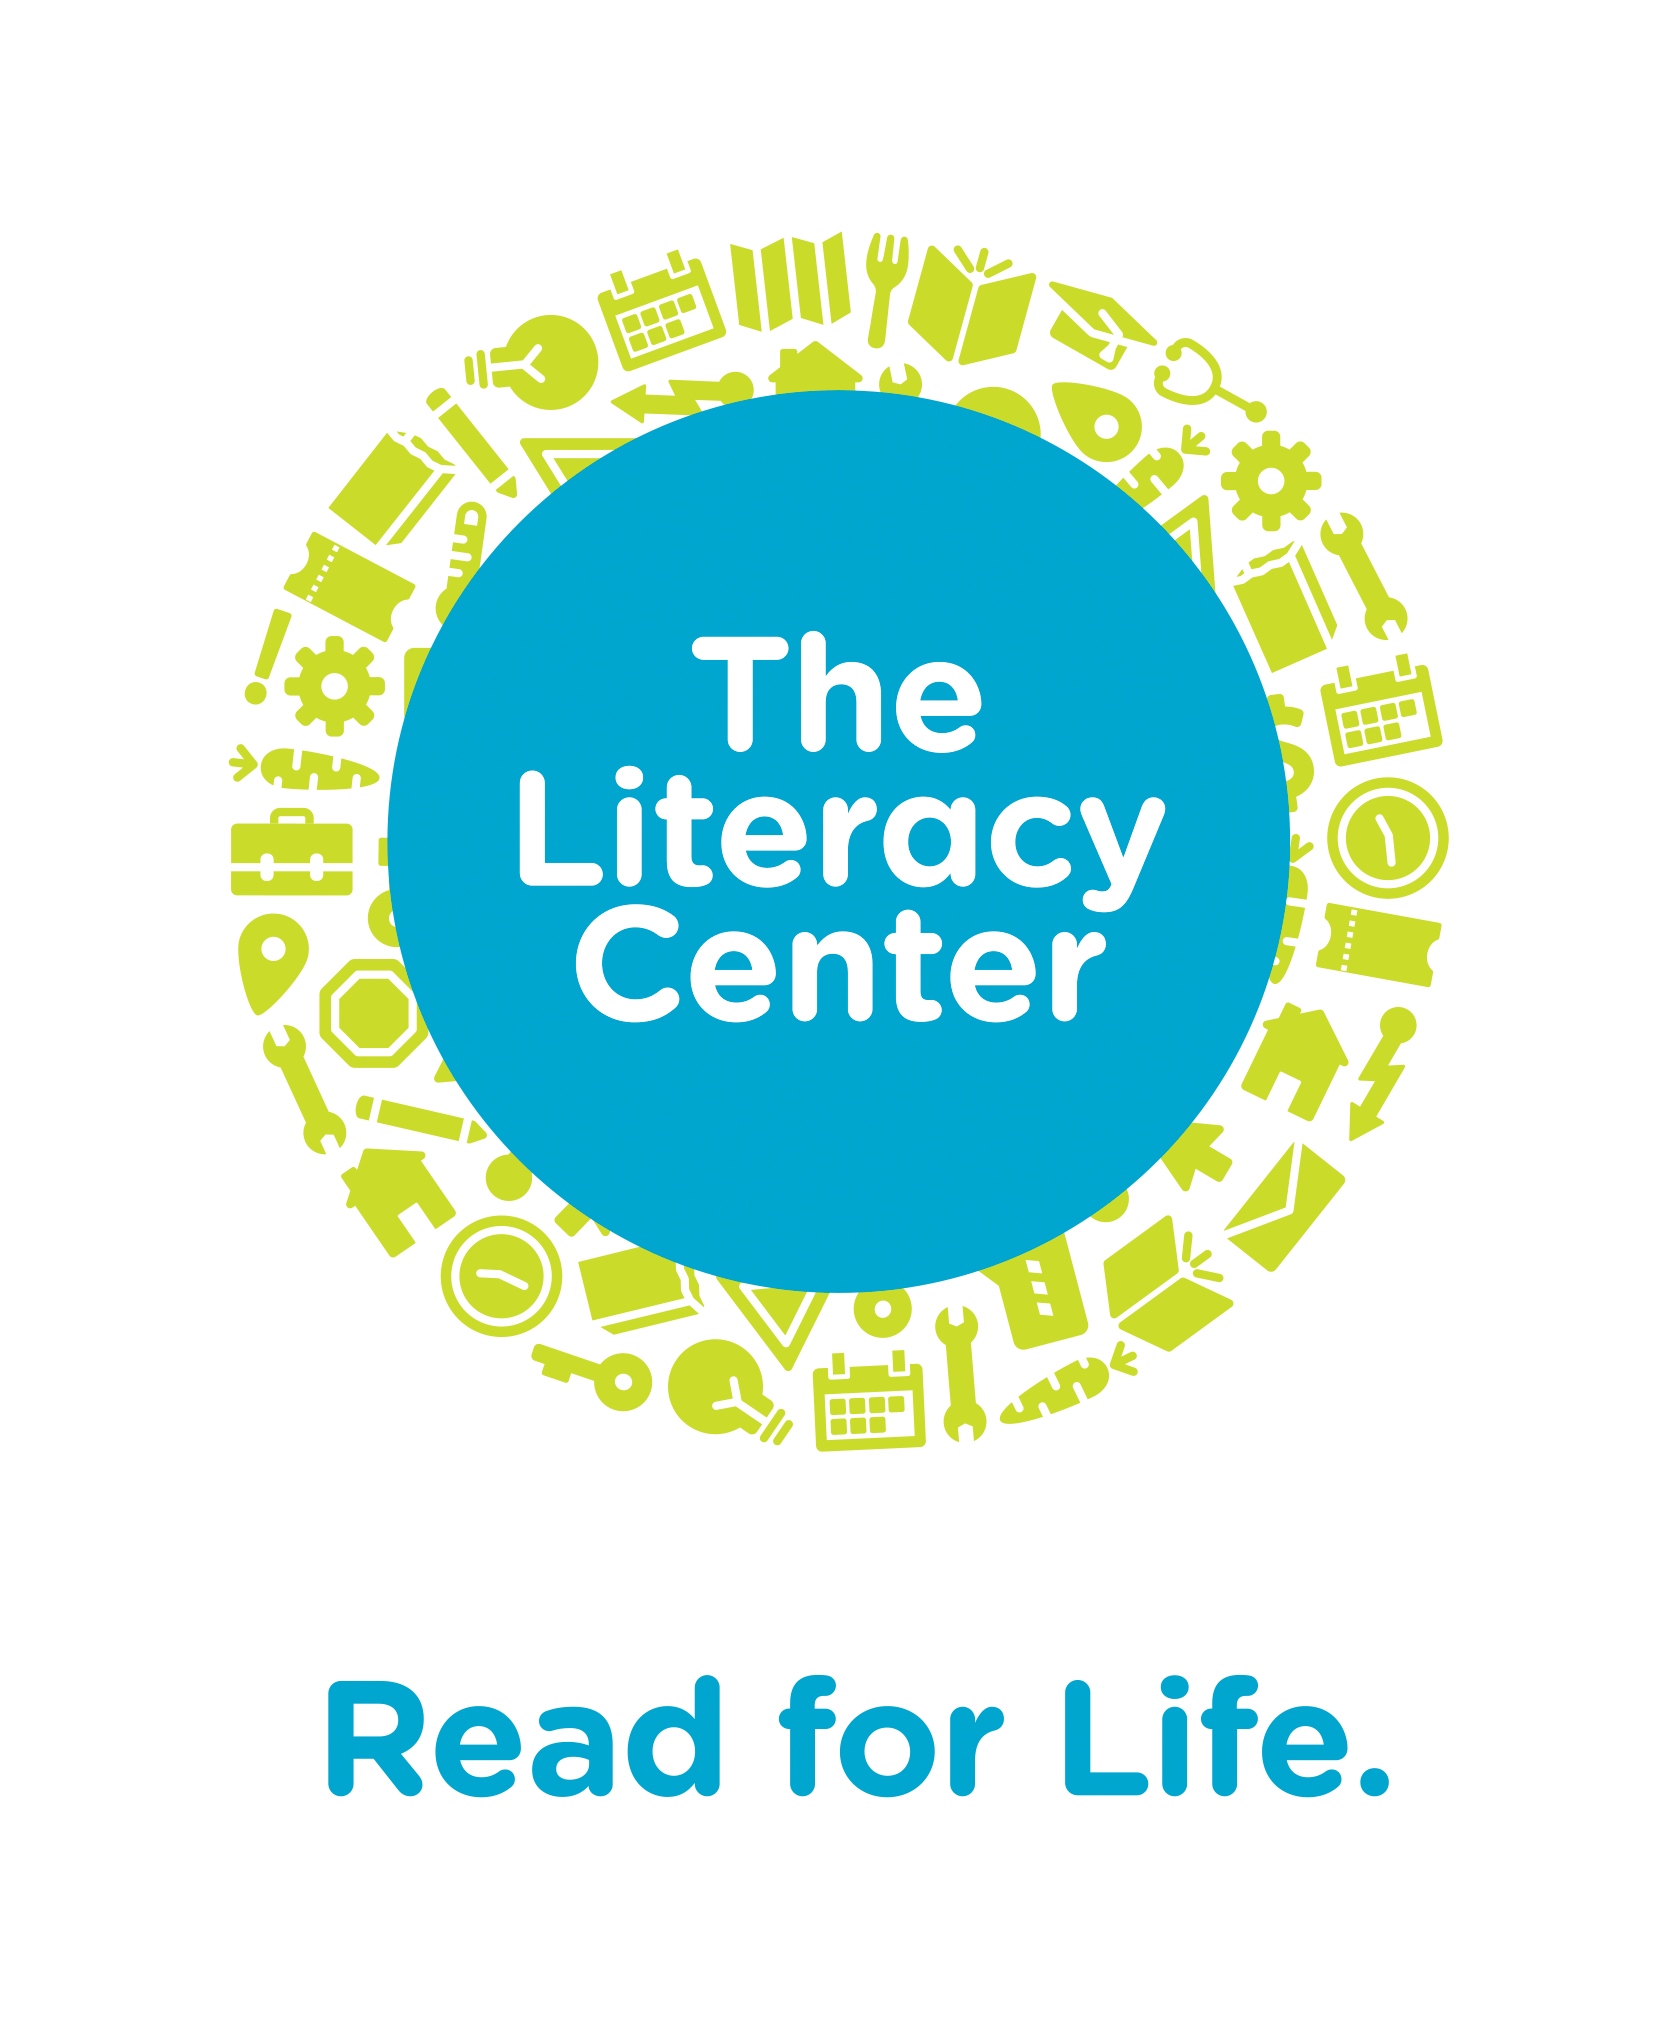 The Literacy Center logo